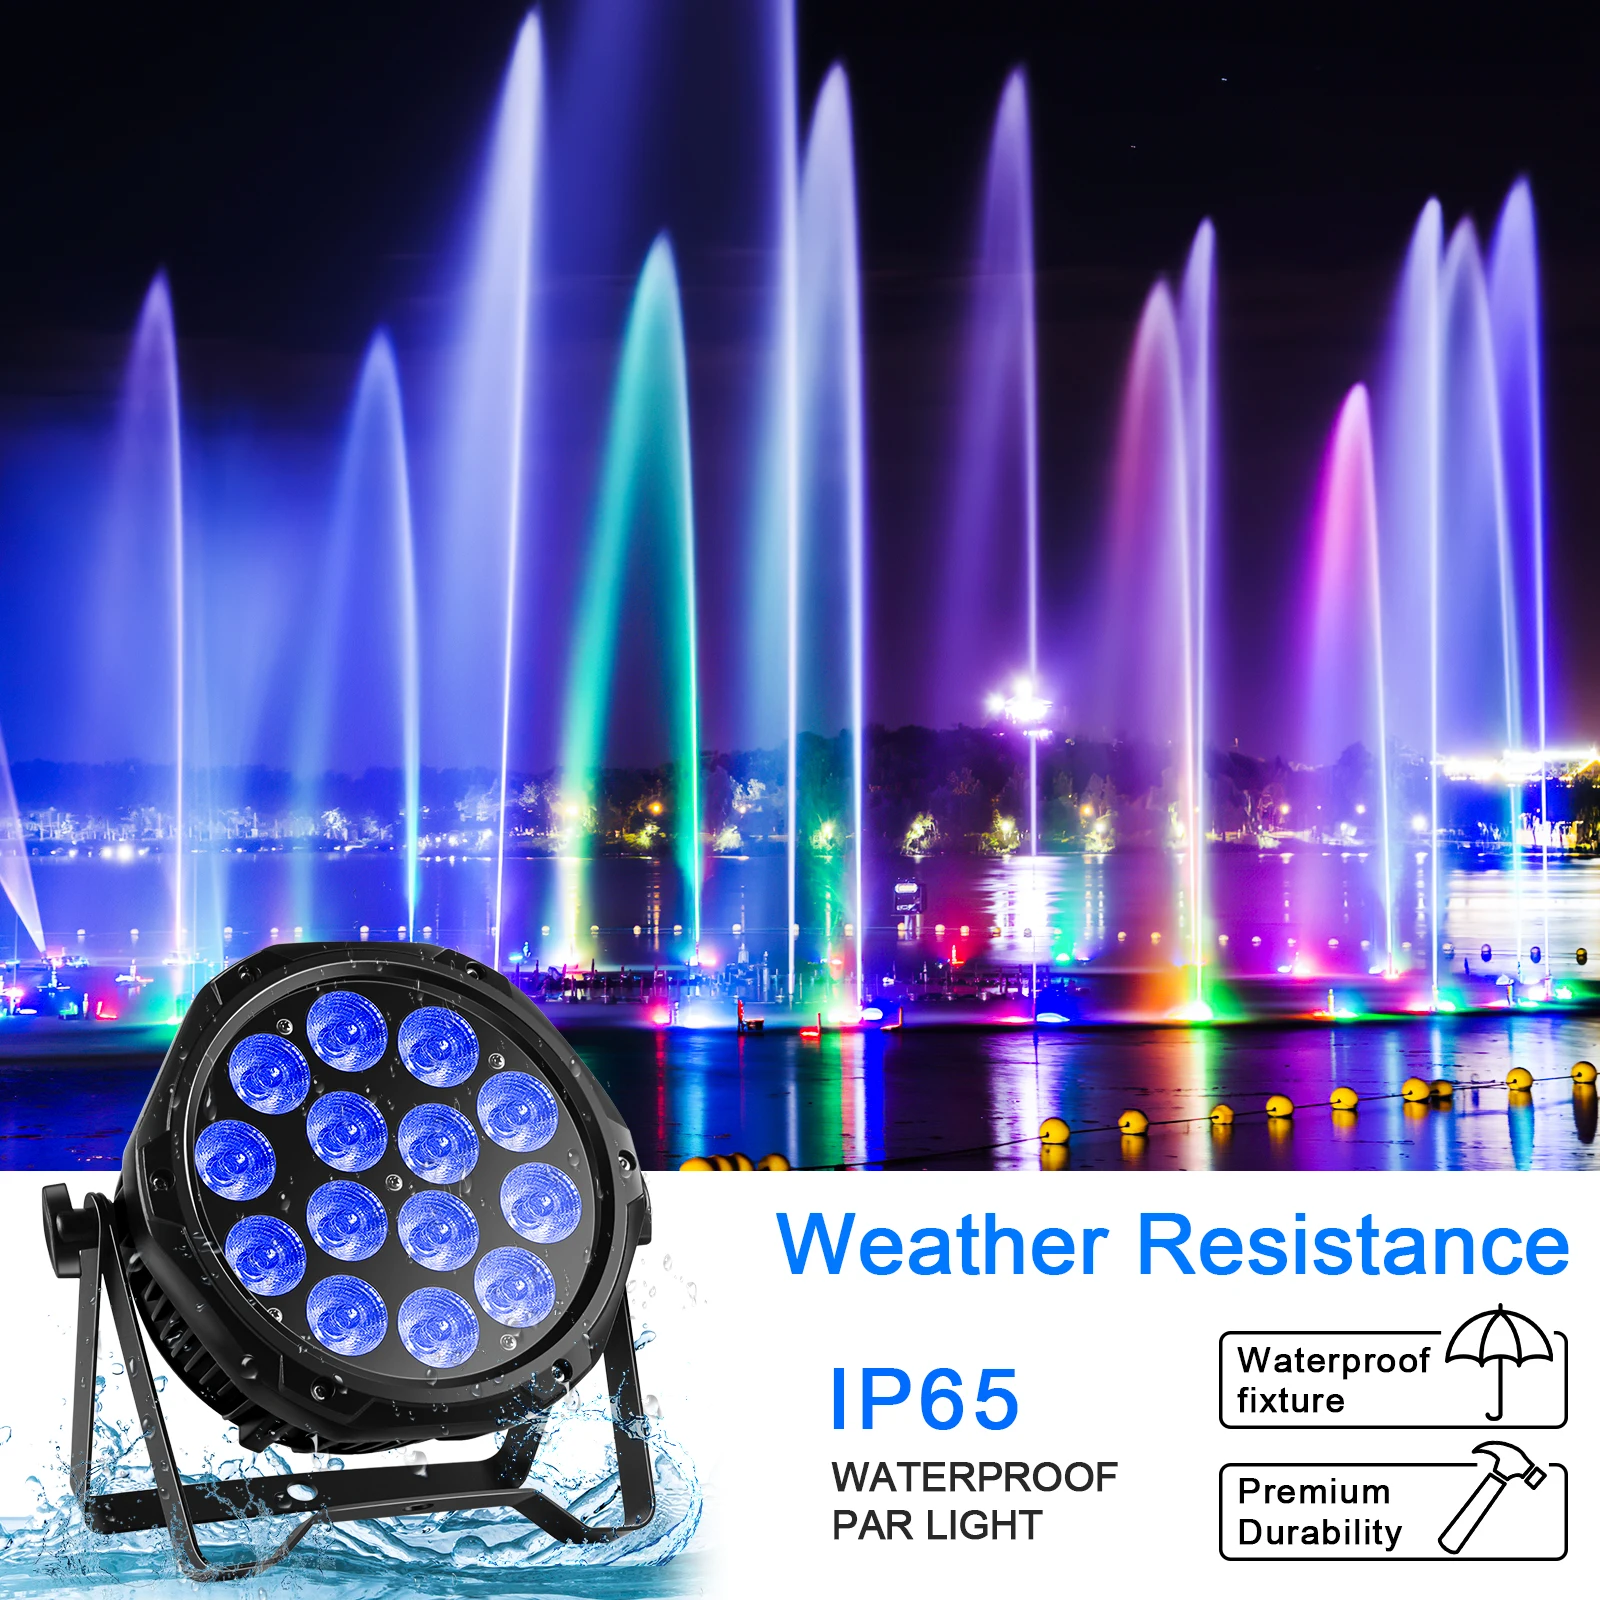 

IP65 Waterproof Flat Par Light 14x10W LED Stage Effect Par Light RGBW Beam Wash Lighting DMX for Outdoor Show Party Concert